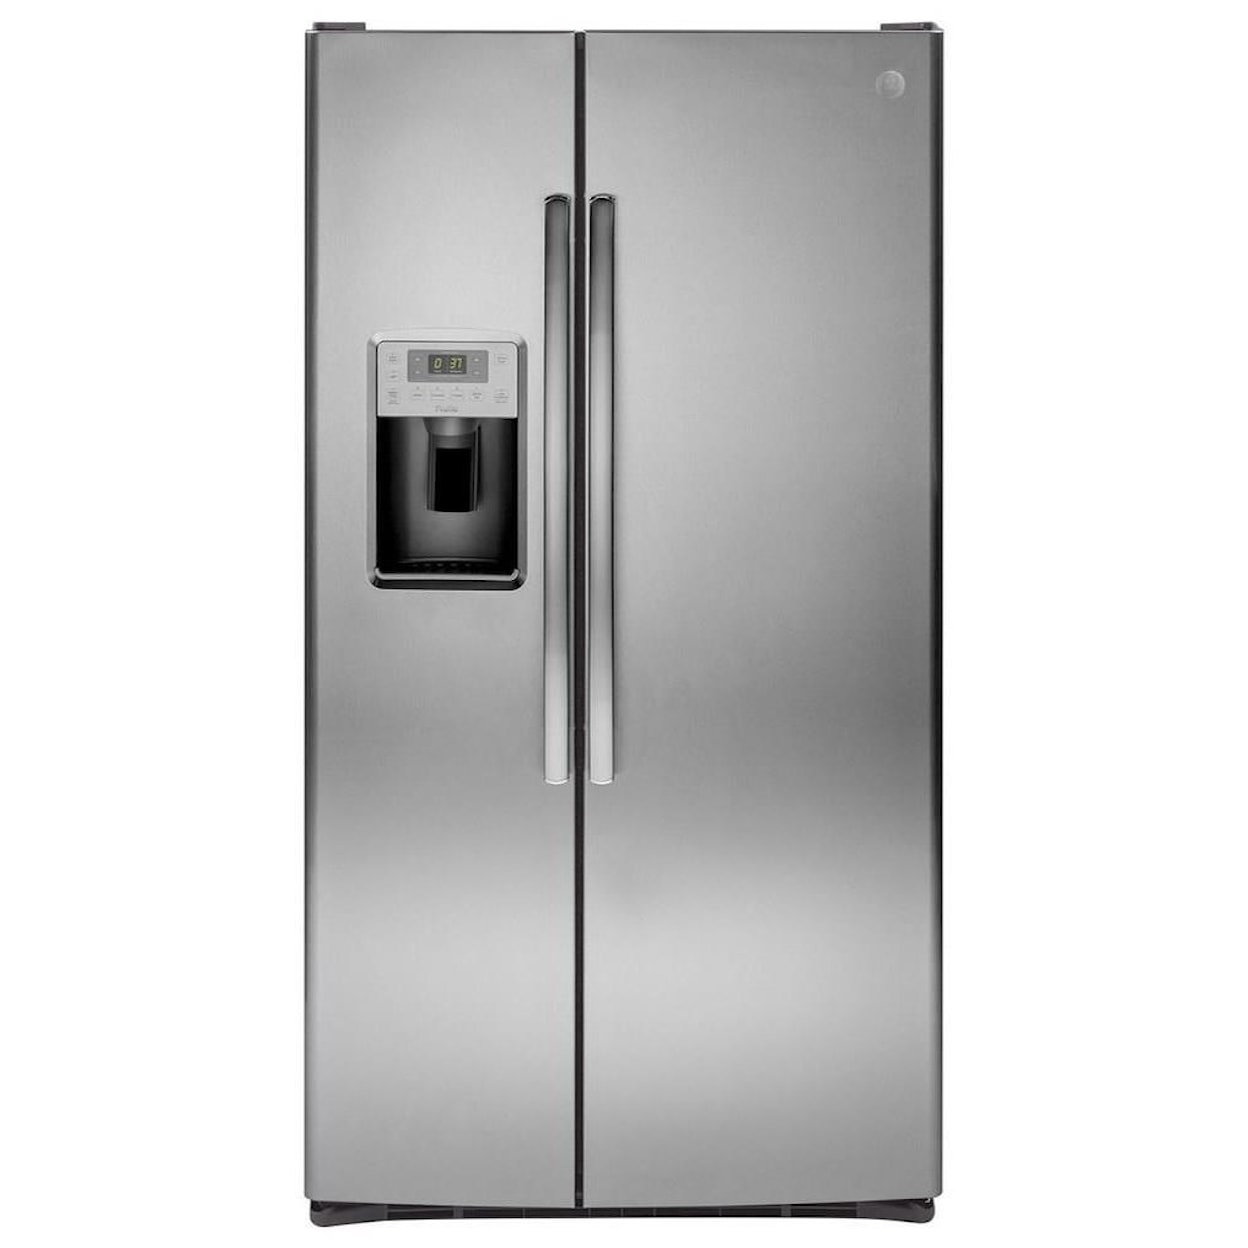 GE Appliances GE Profile Side-By-Side Refrigerators GE Profile™ Series 28.2 Cu. Ft. Refrigerator